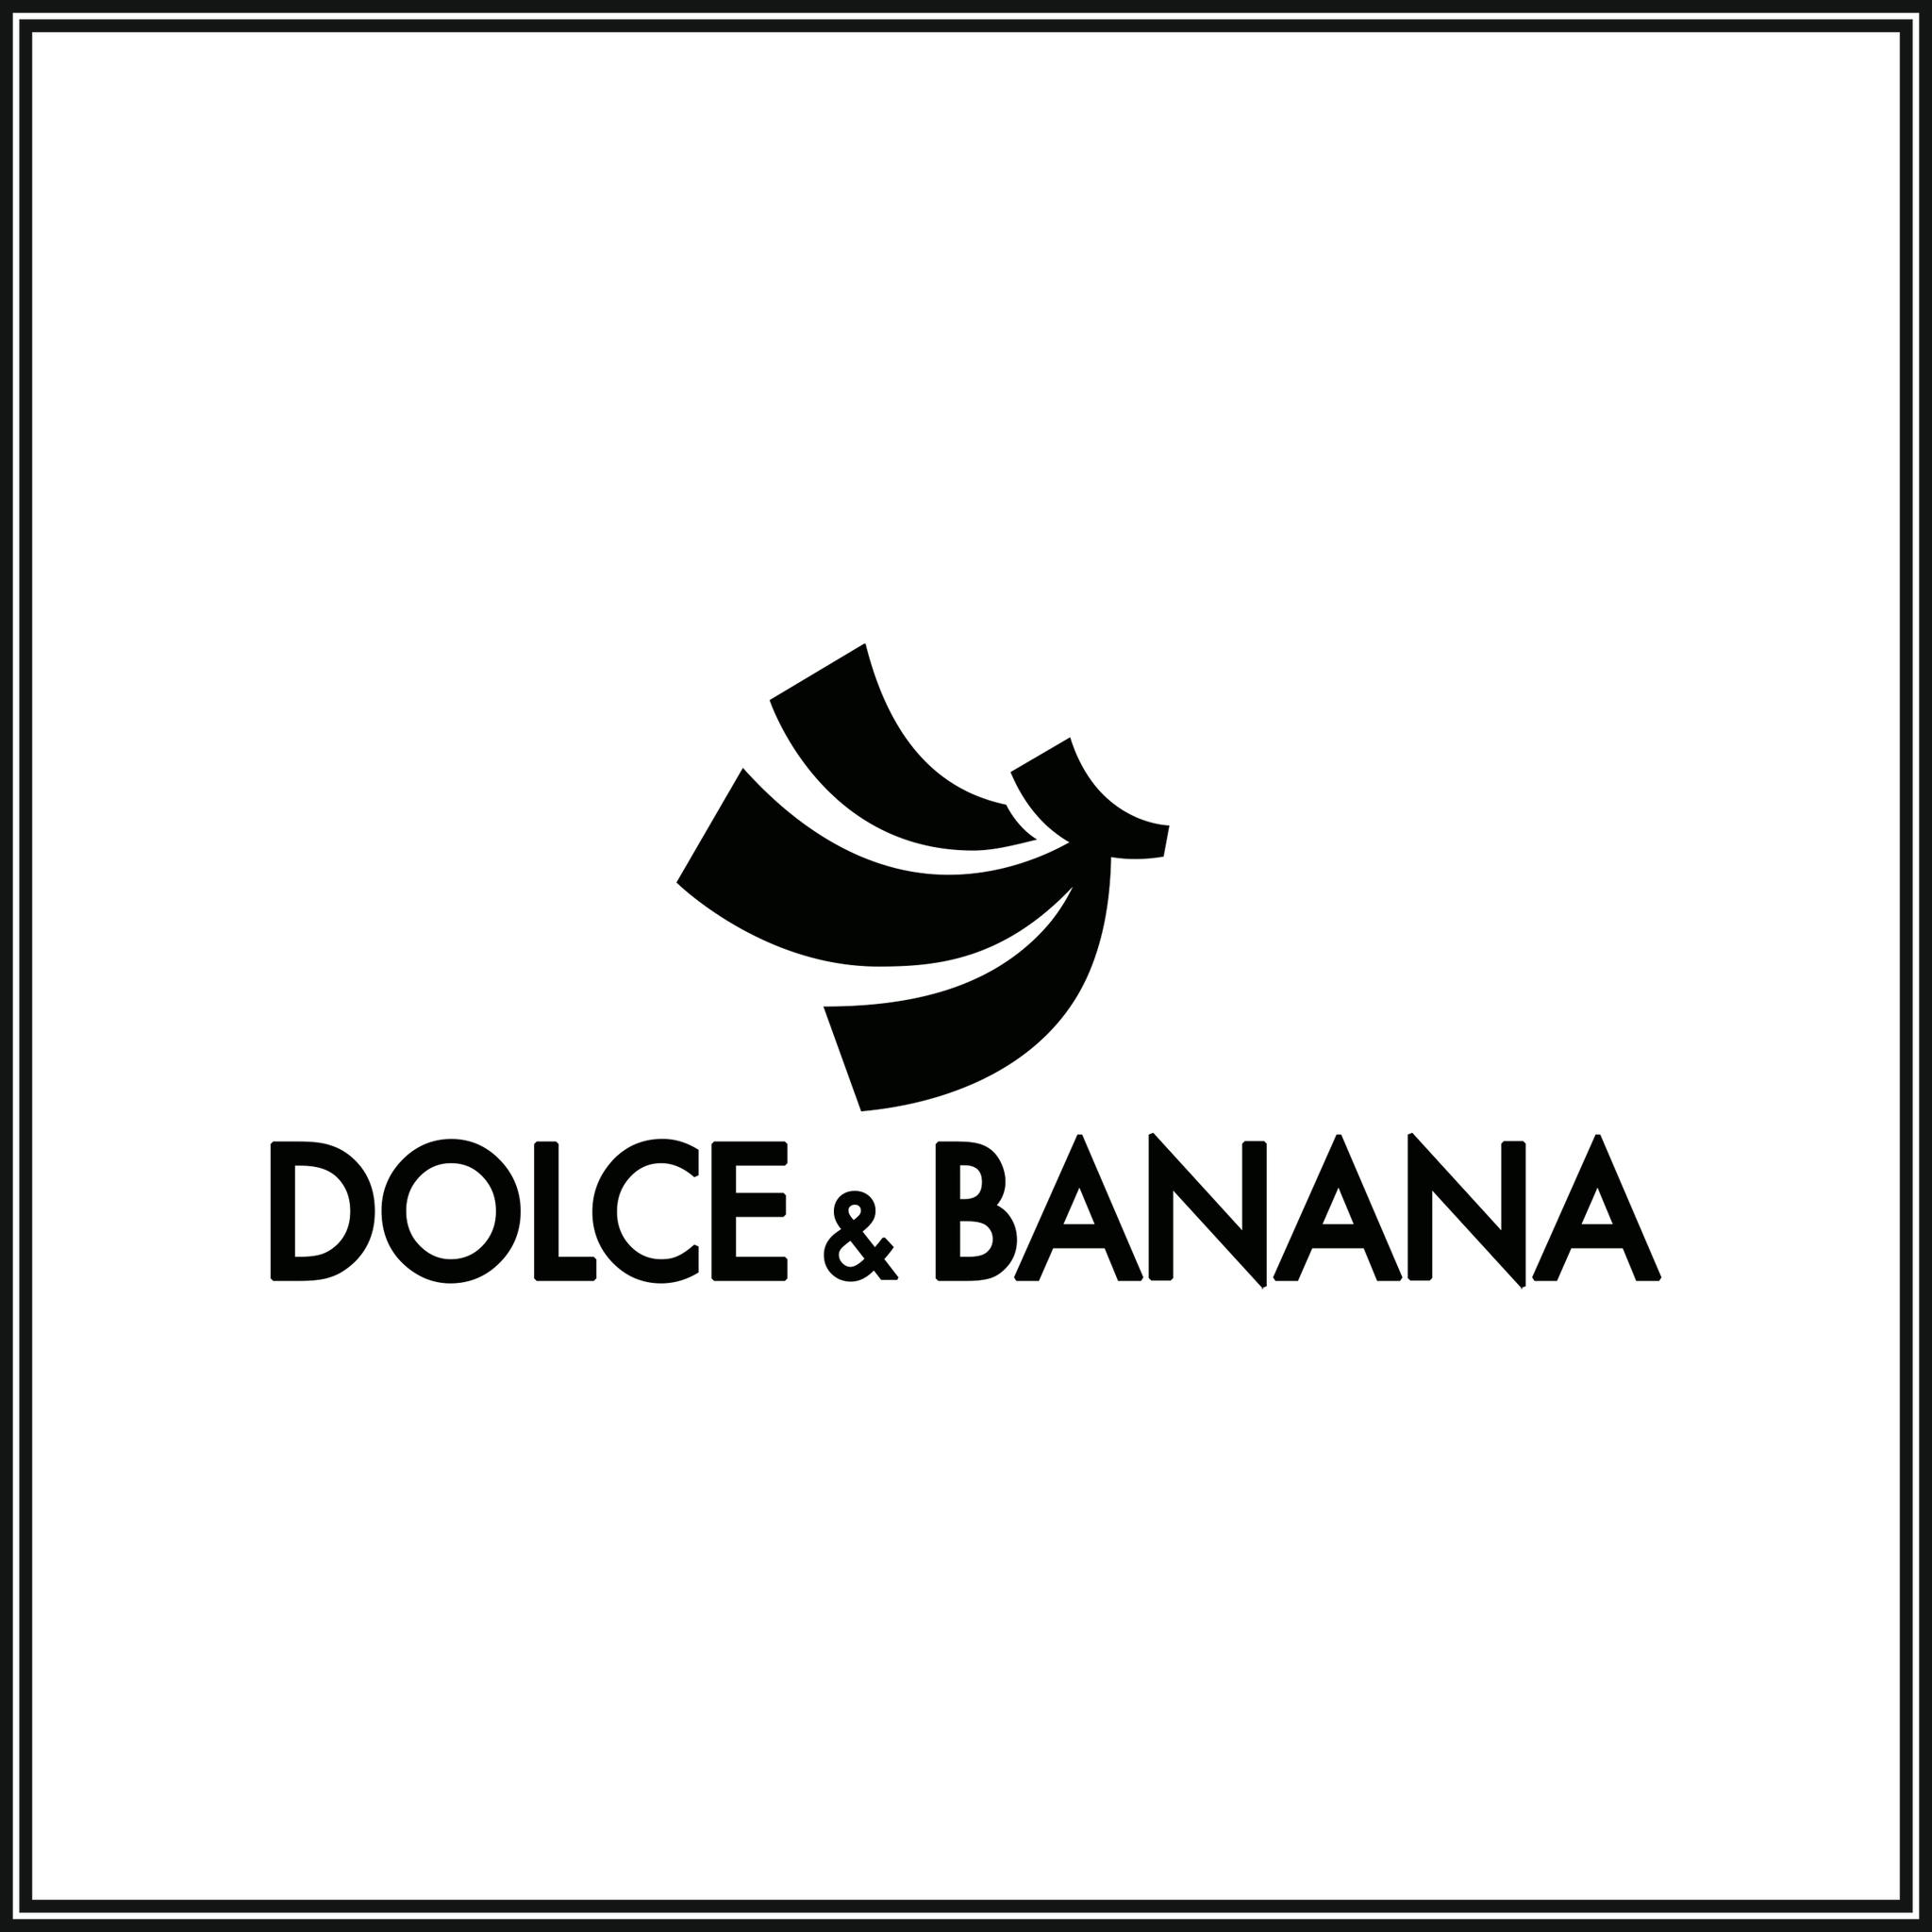 Dolce e Banana